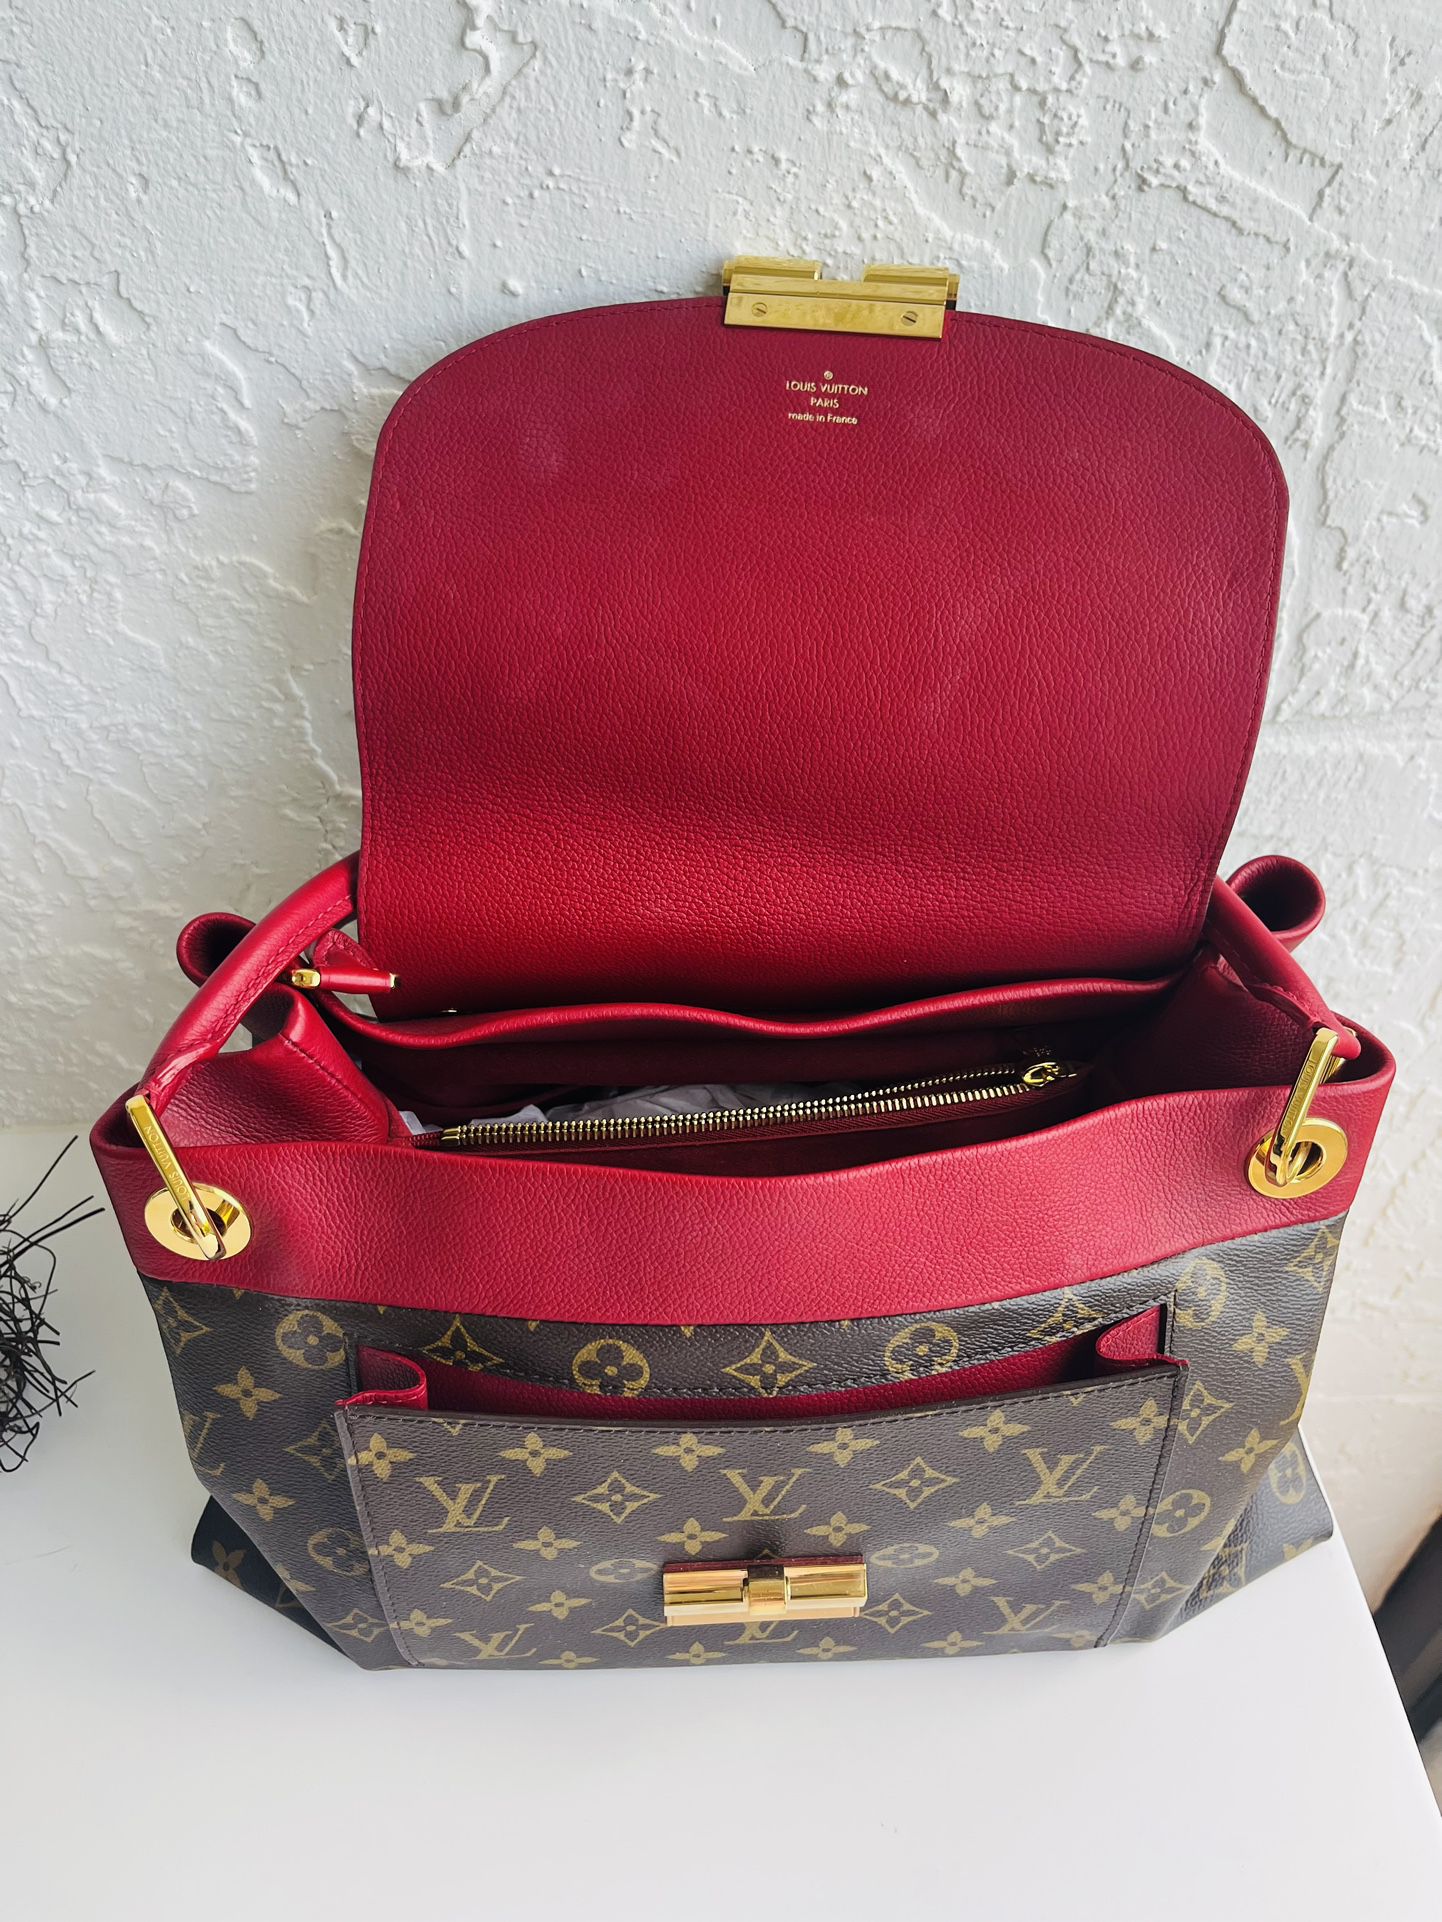 Louis Vuitton Eva Bag for Sale in Boca Raton, FL - OfferUp